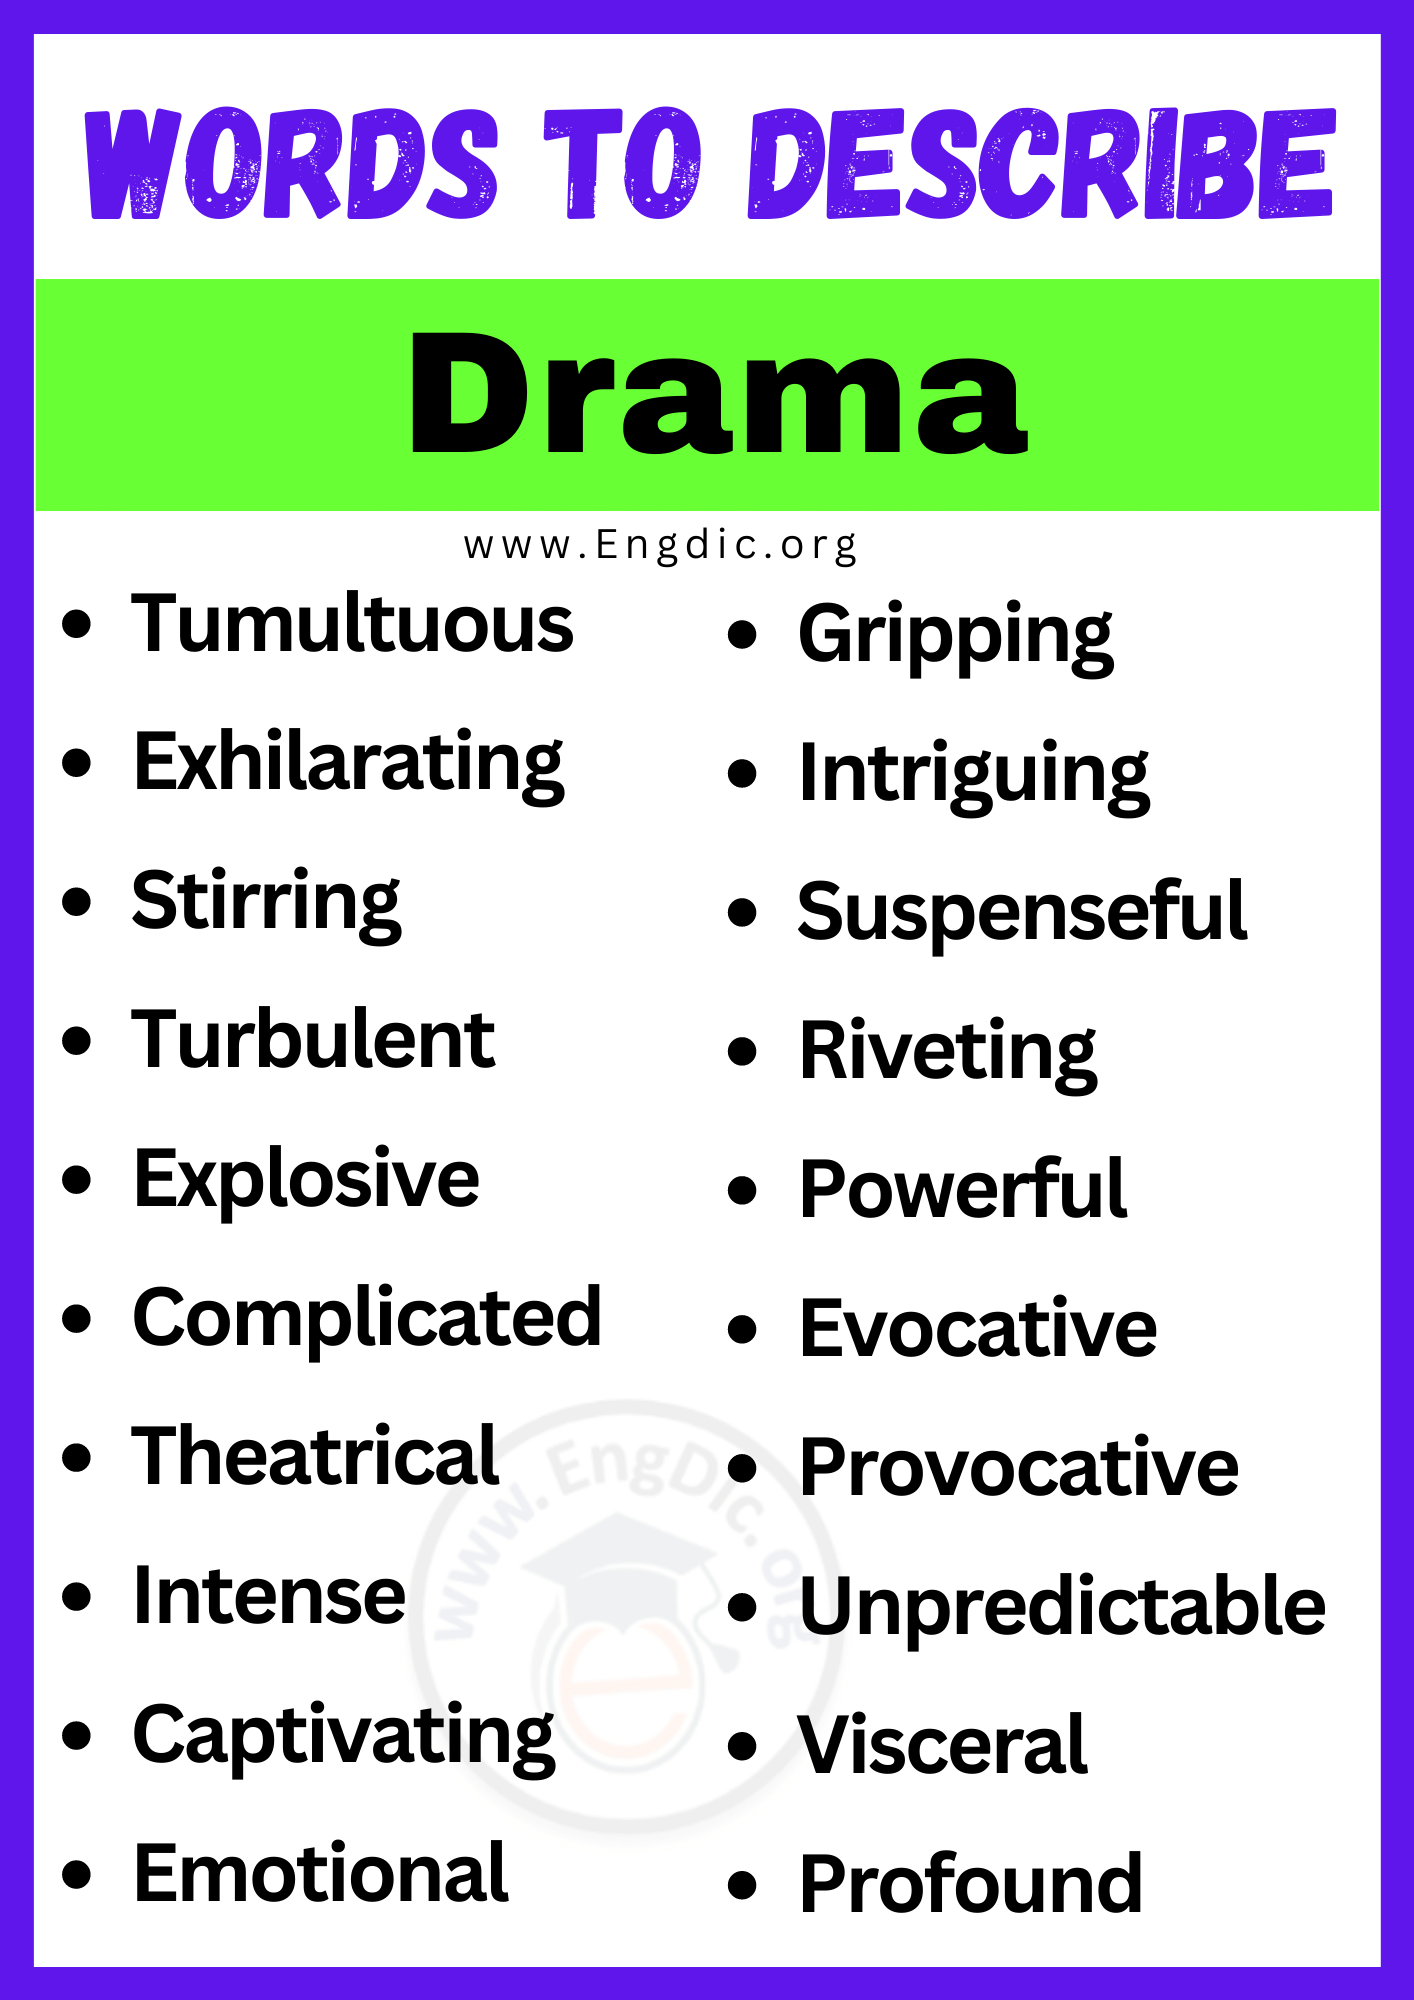 Words to Describe Drama